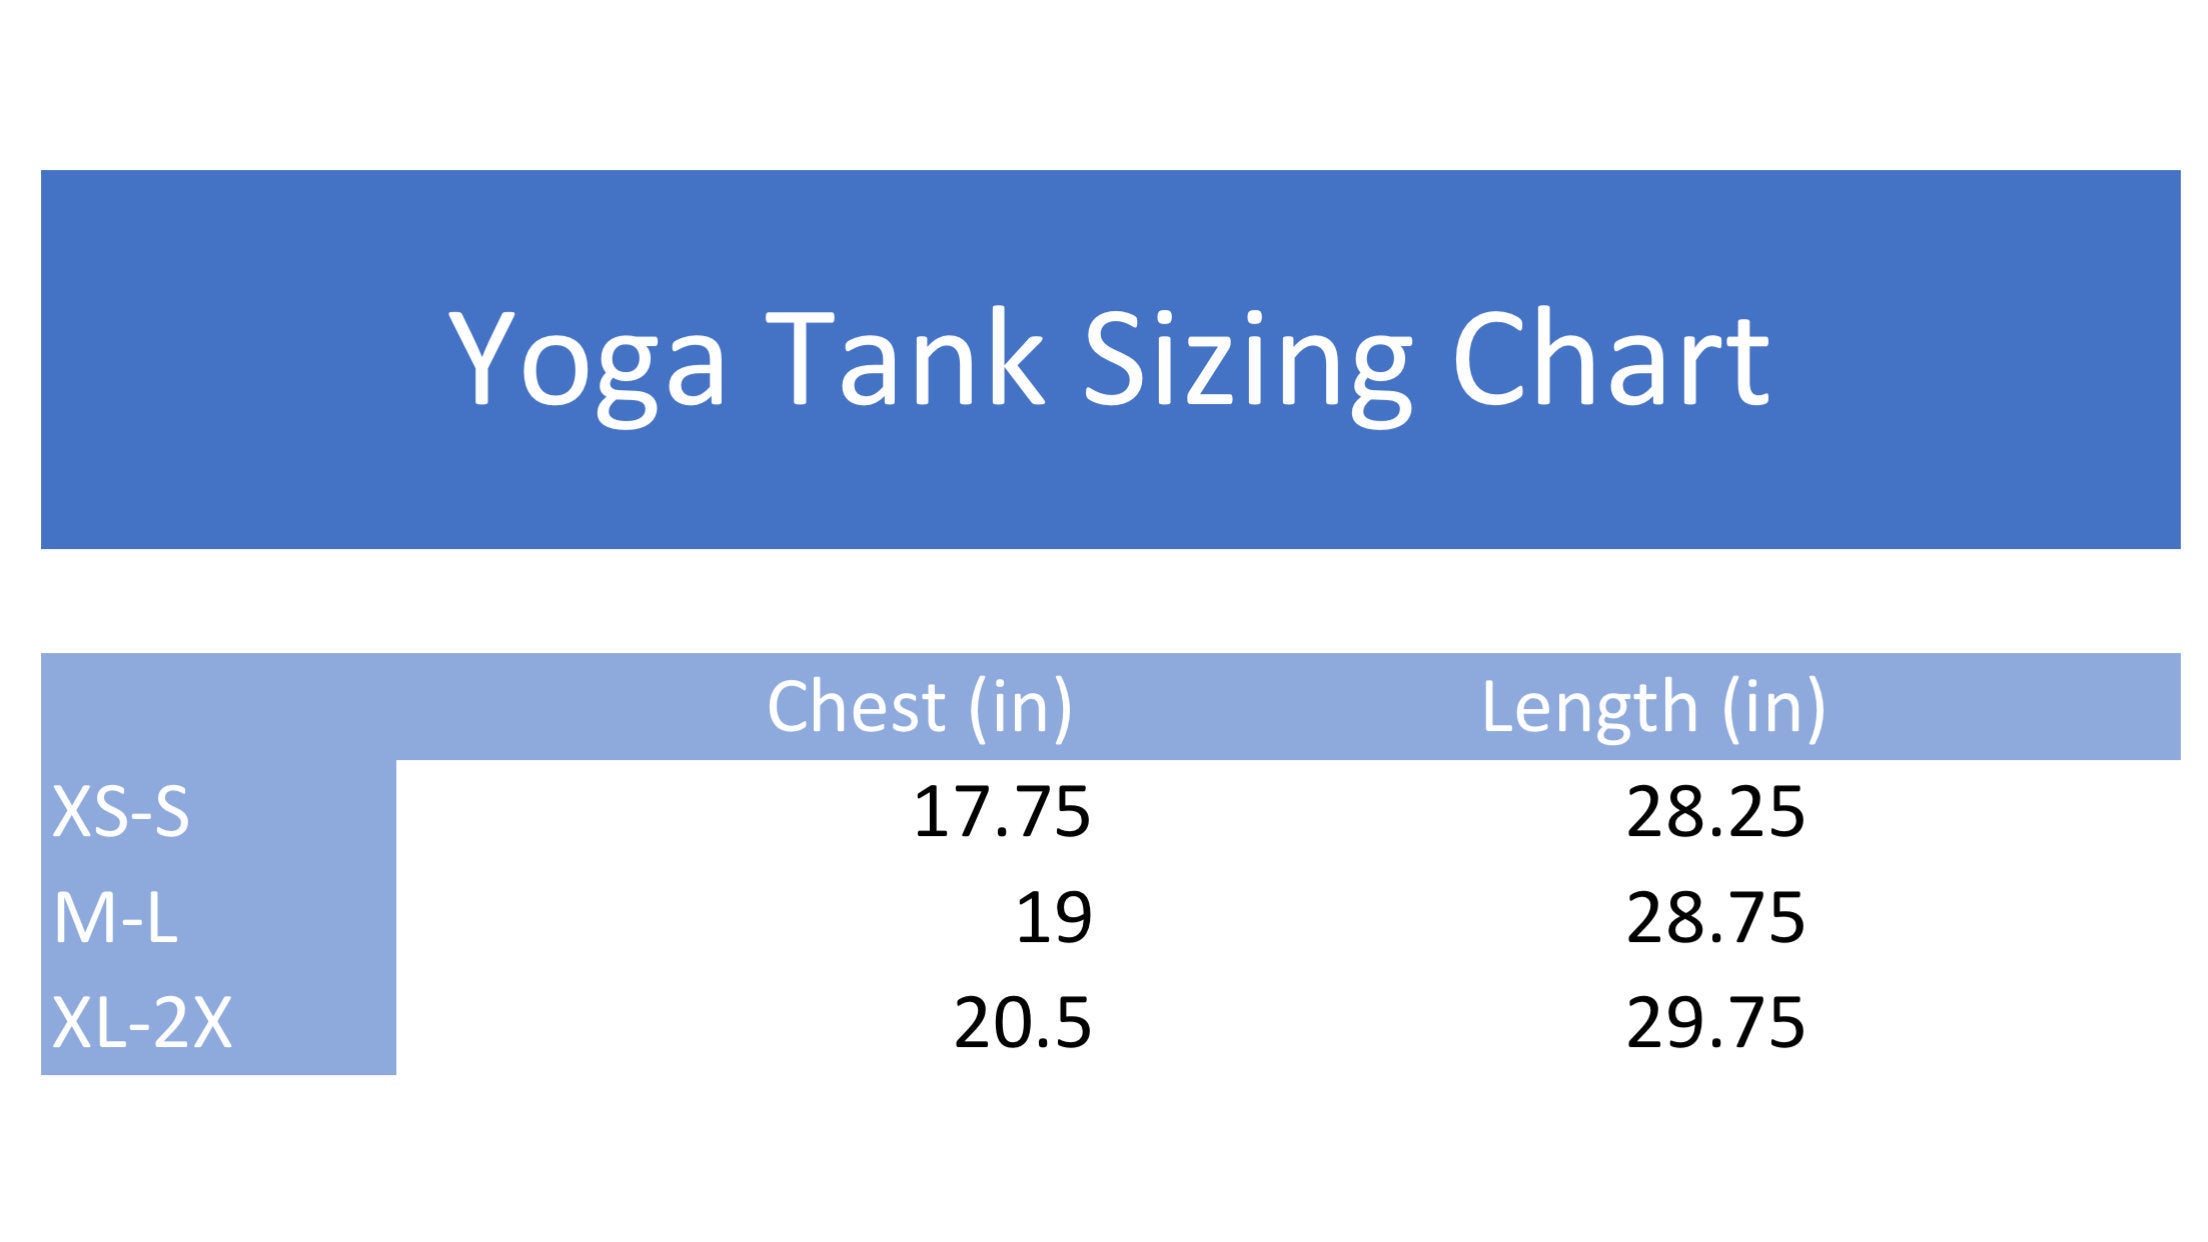 Running Tanks - Funny Workout Tank - Yoga Shirts - Yoga T-Shirt